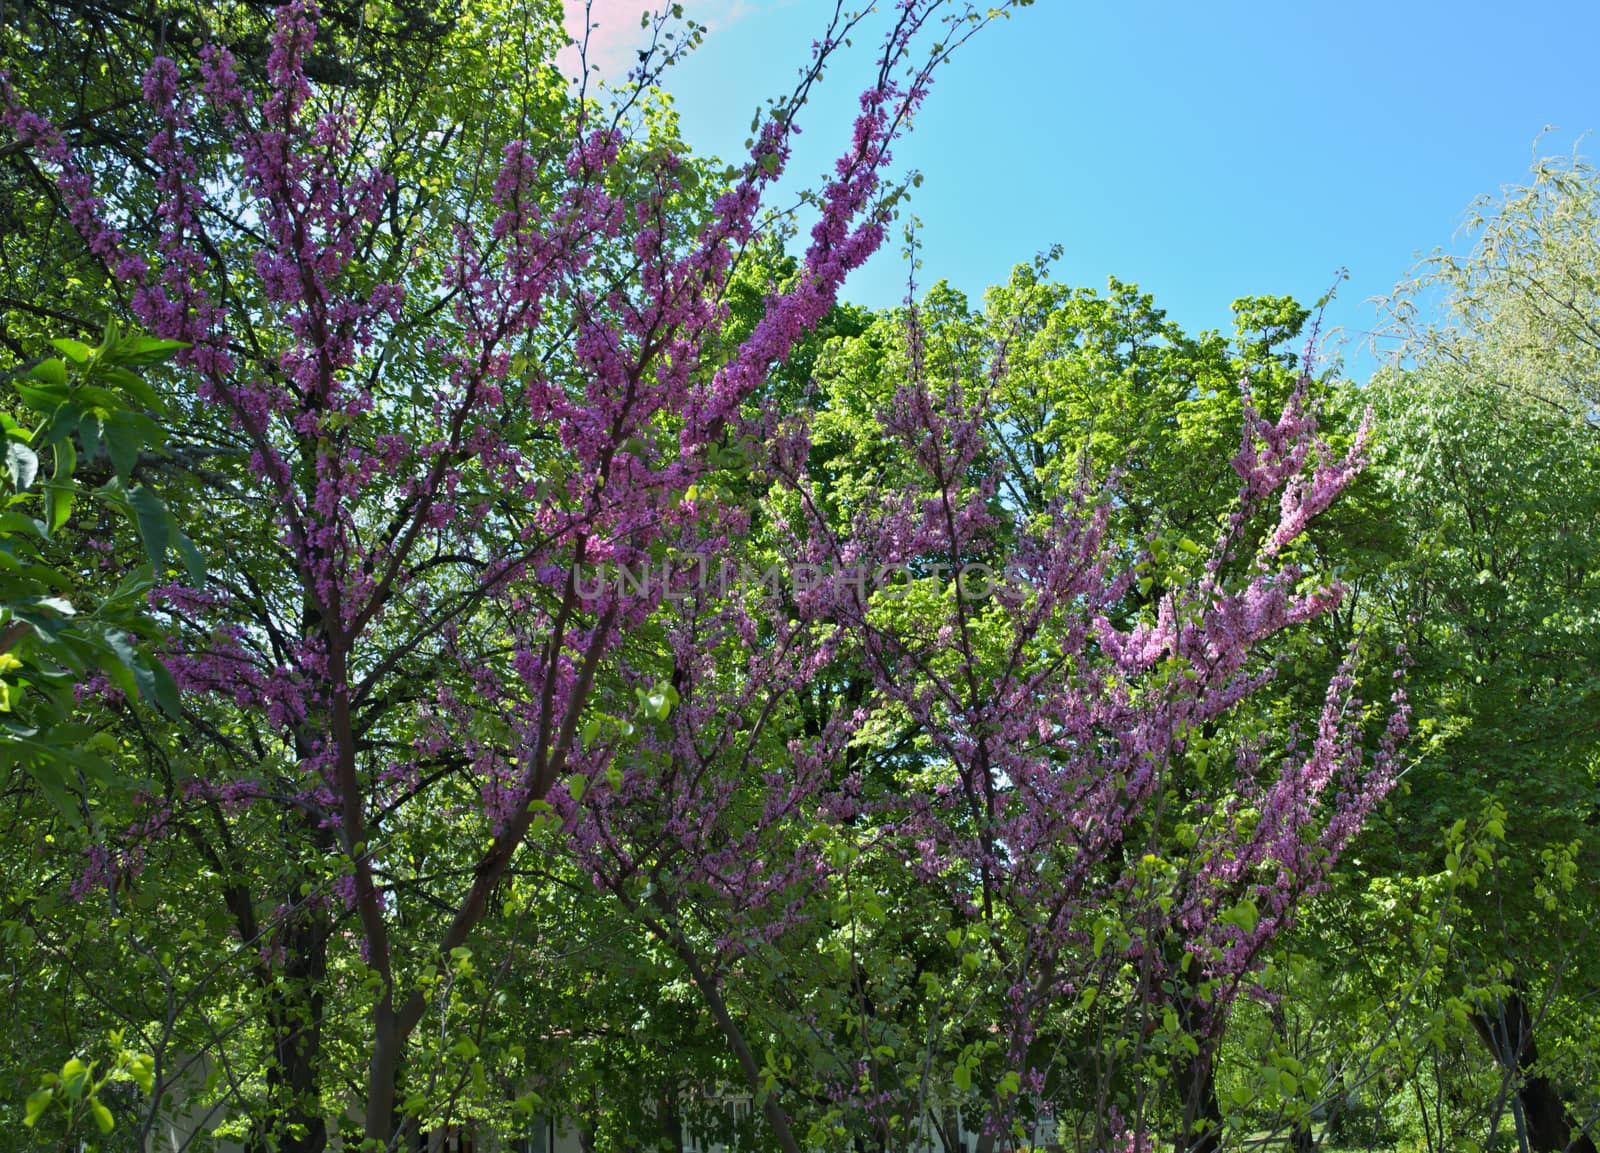 Tree with purple flowers in park by sheriffkule